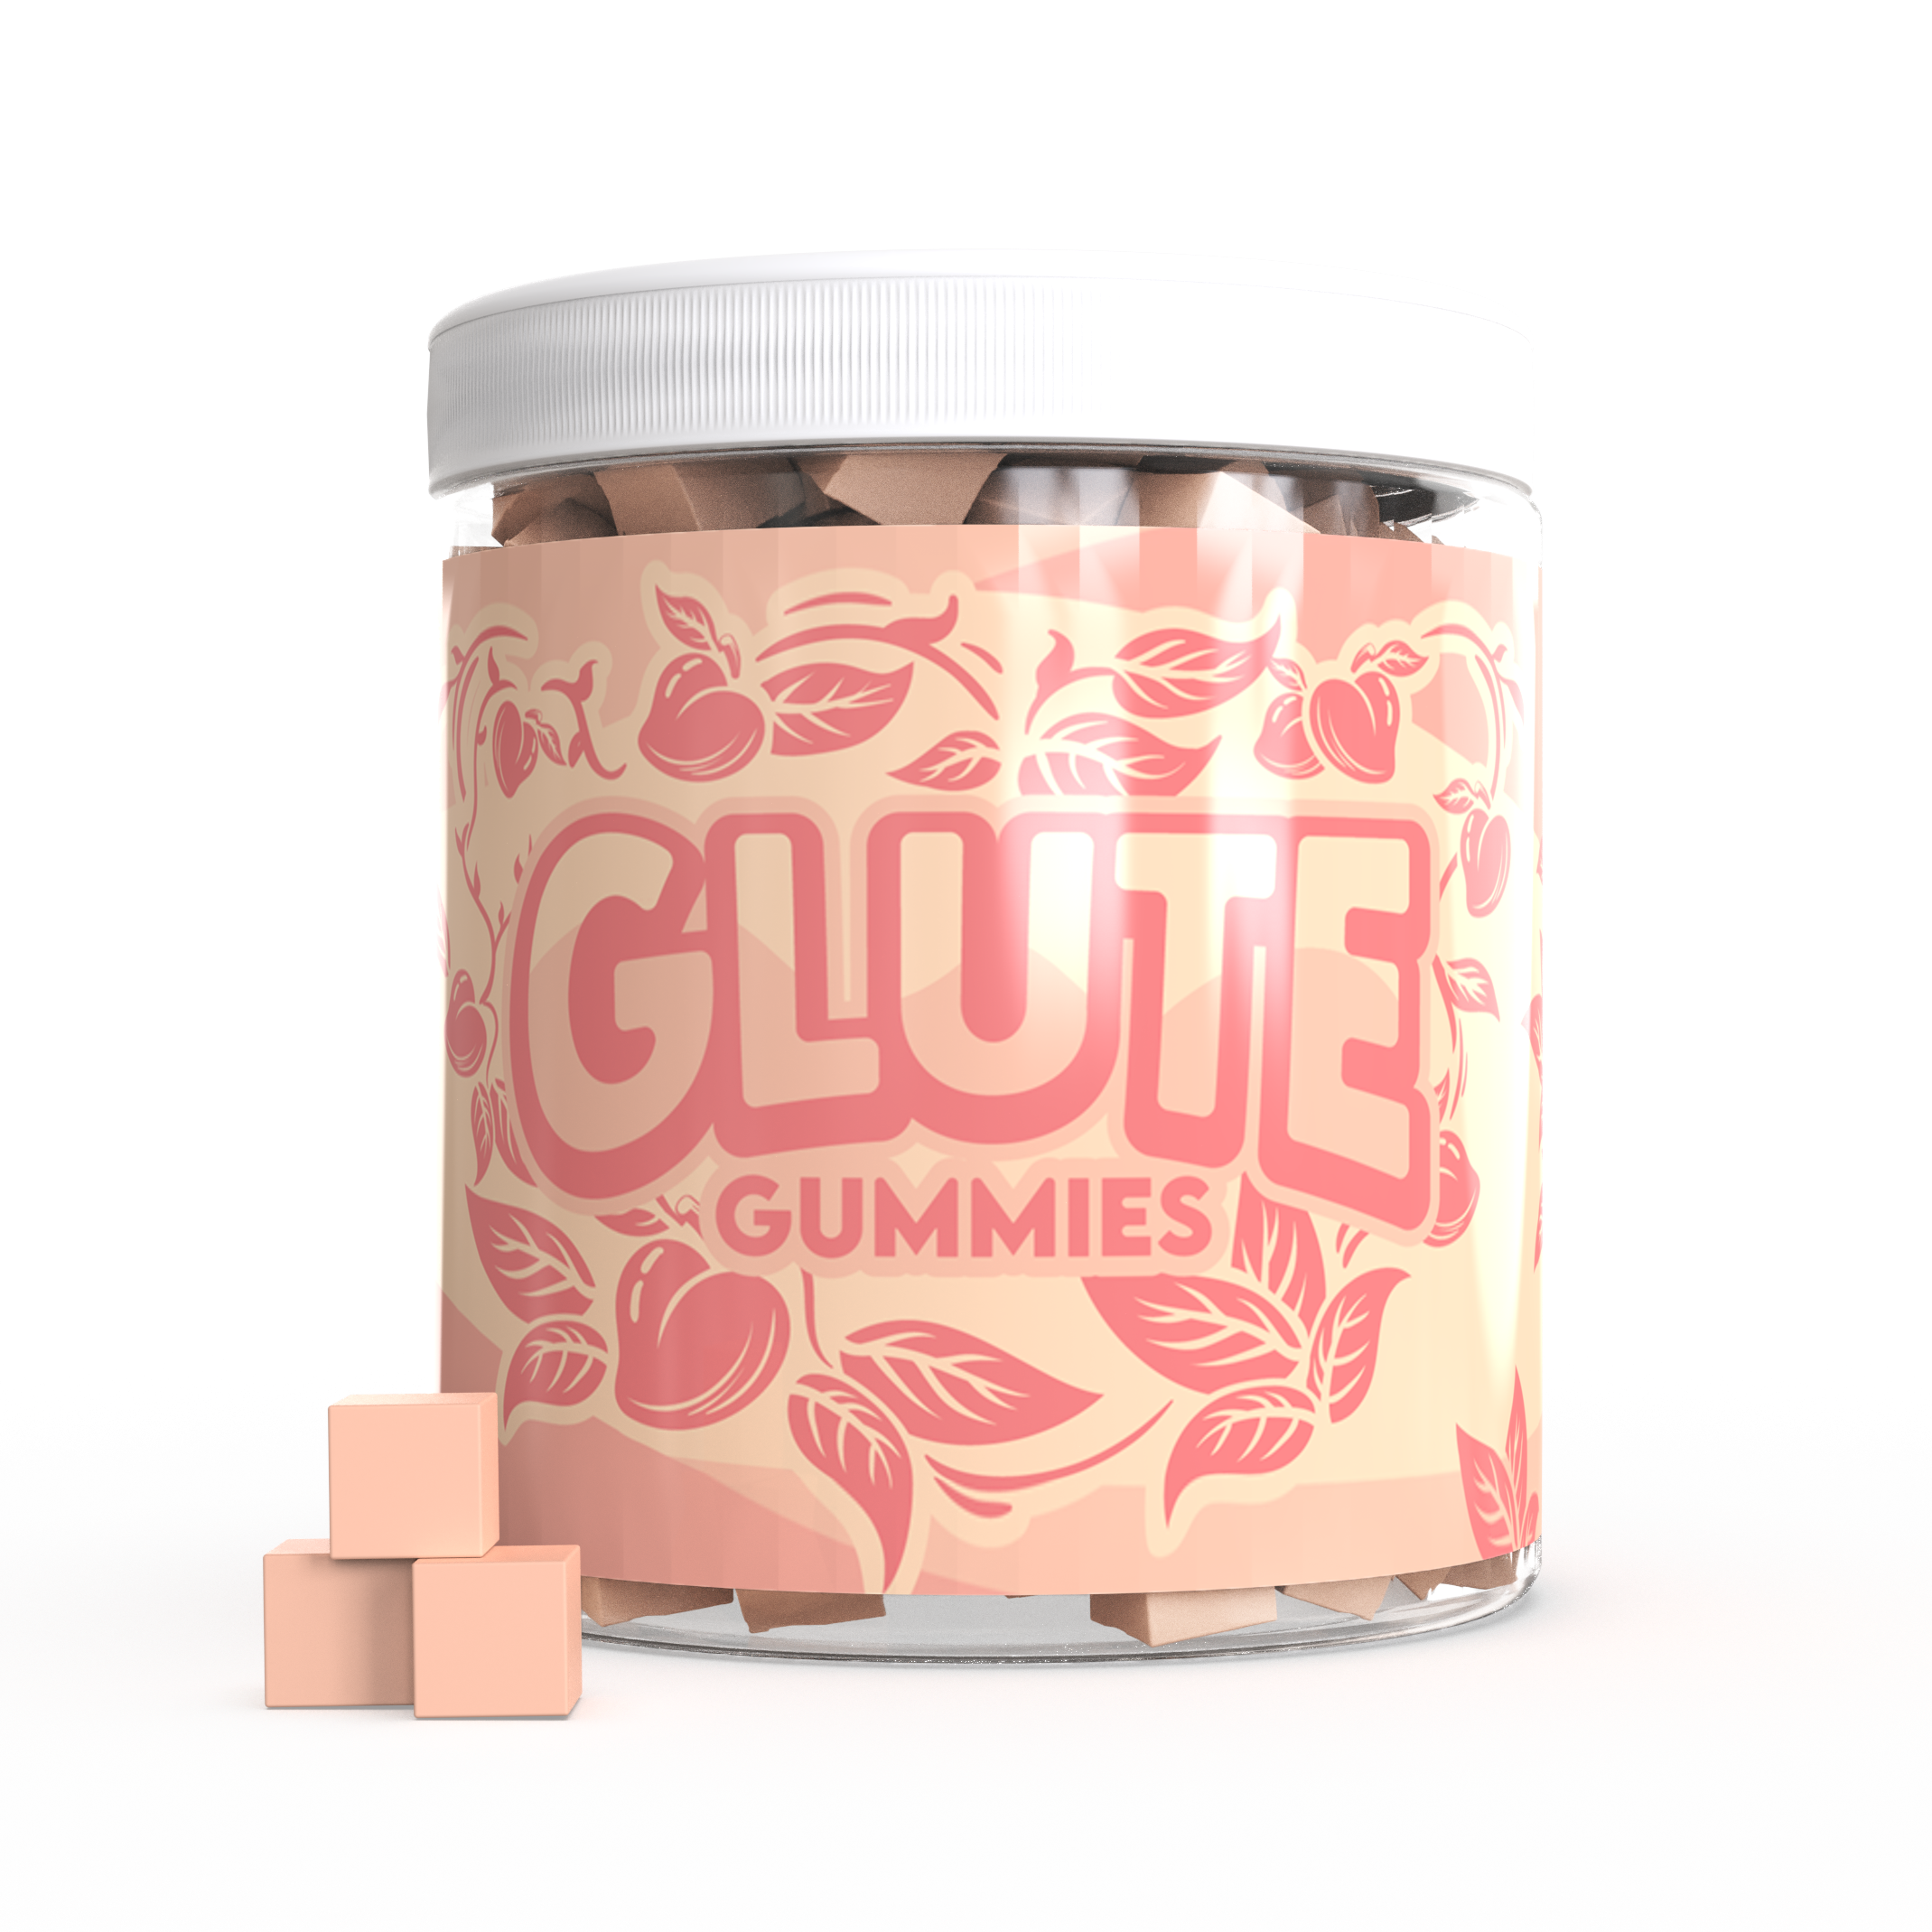 20% OFF Glute Gummies